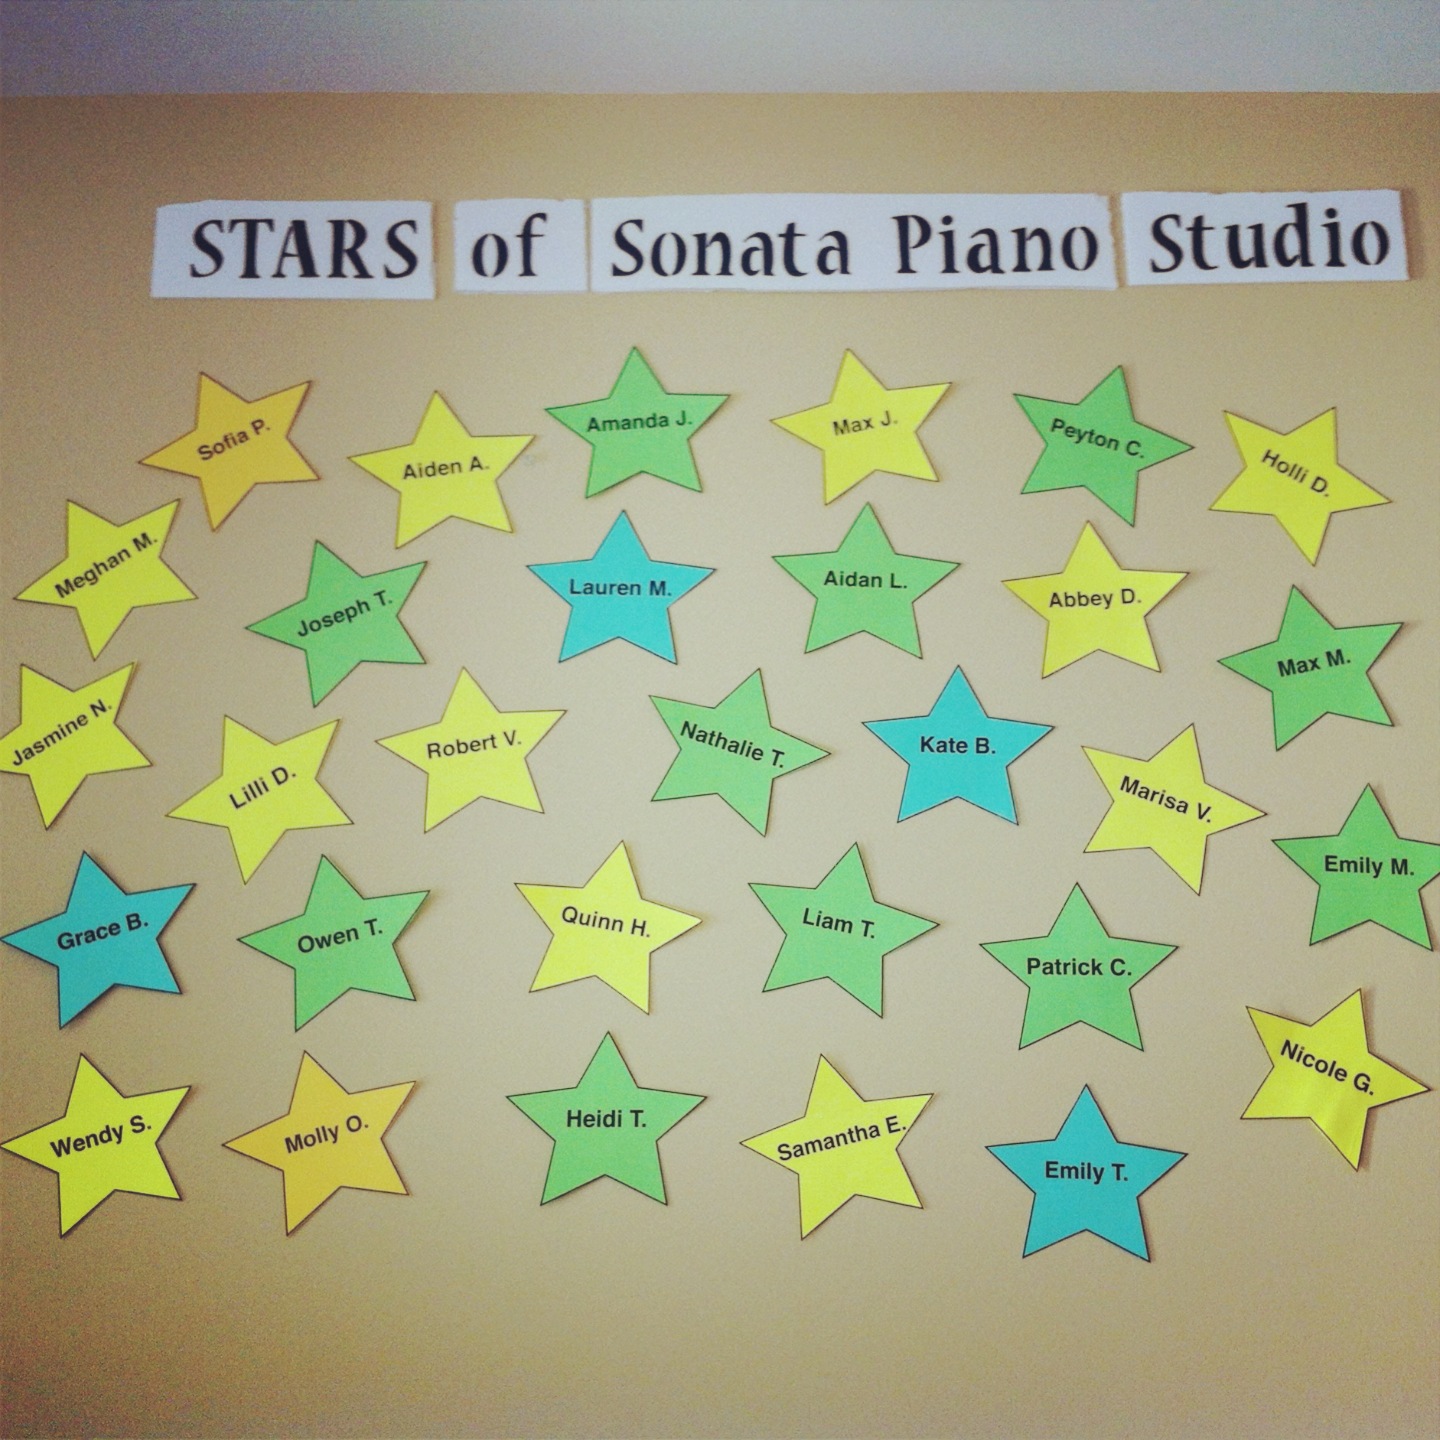 The Stars of Sonata Piano Studio for the 2013/2014 academic year